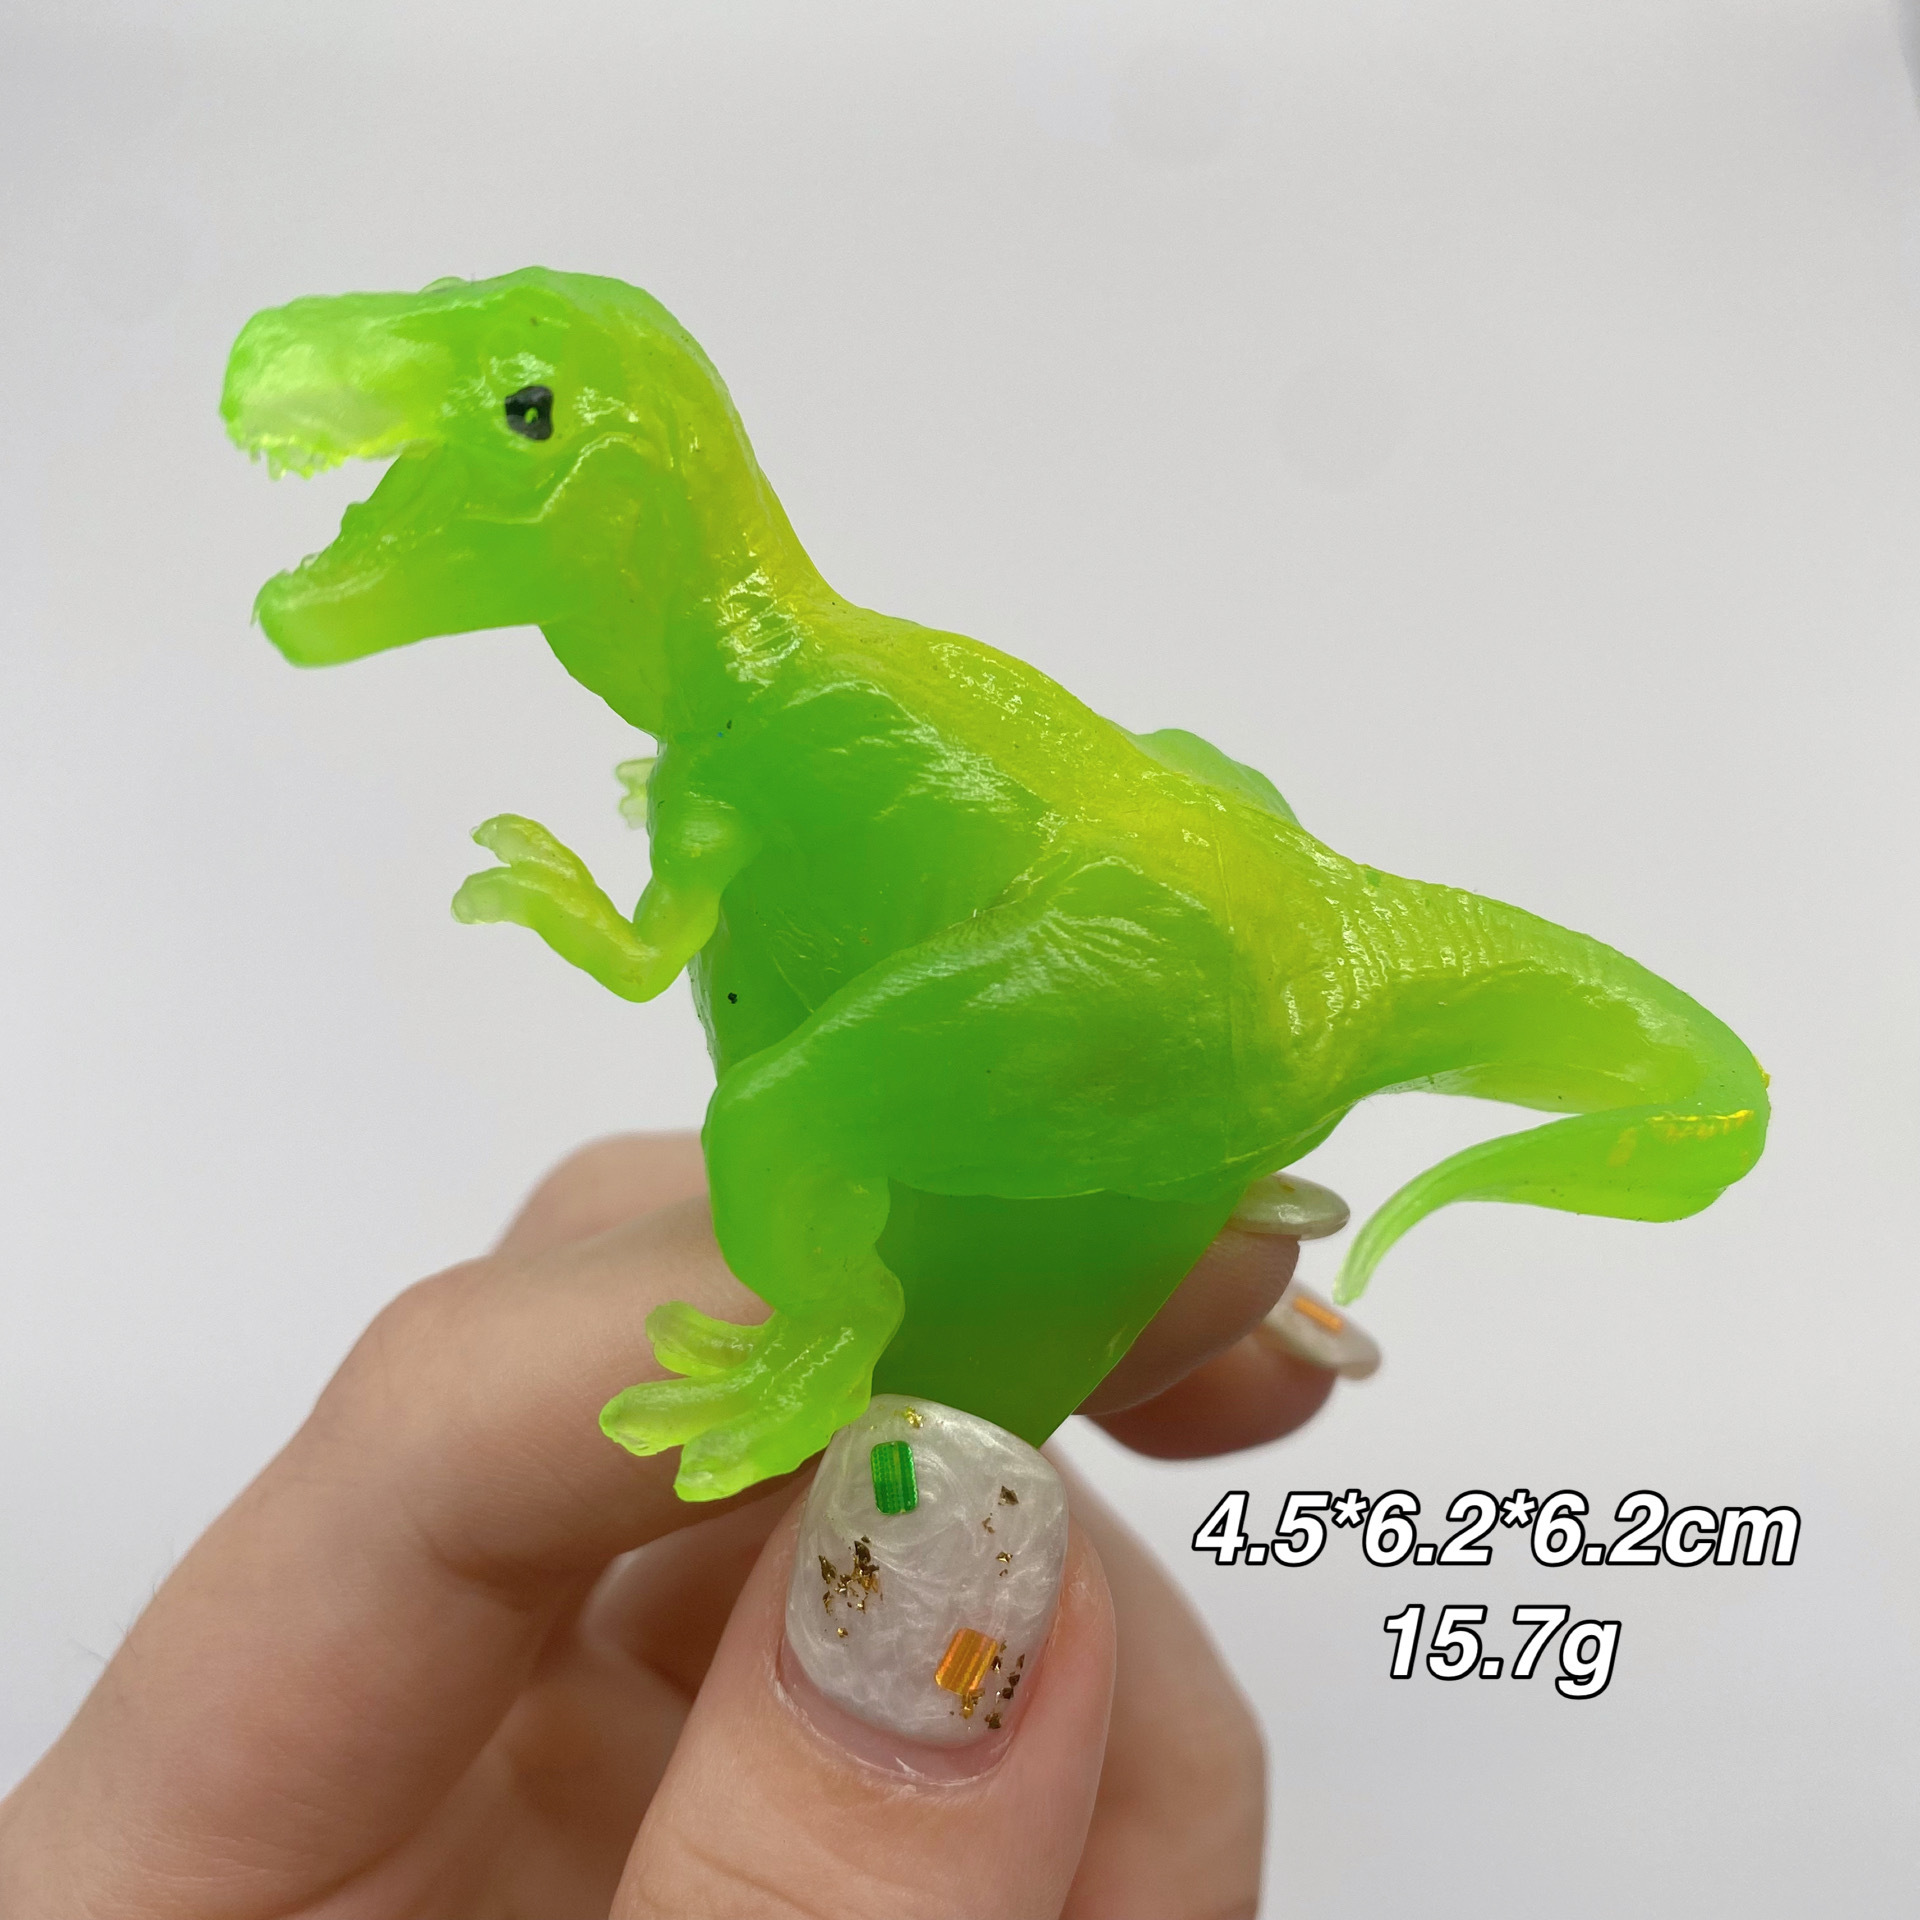 Ledlight Ring for Amazon Hot Sale Luminous Dinosaur Ring Kids Toy Party Gathering Ring